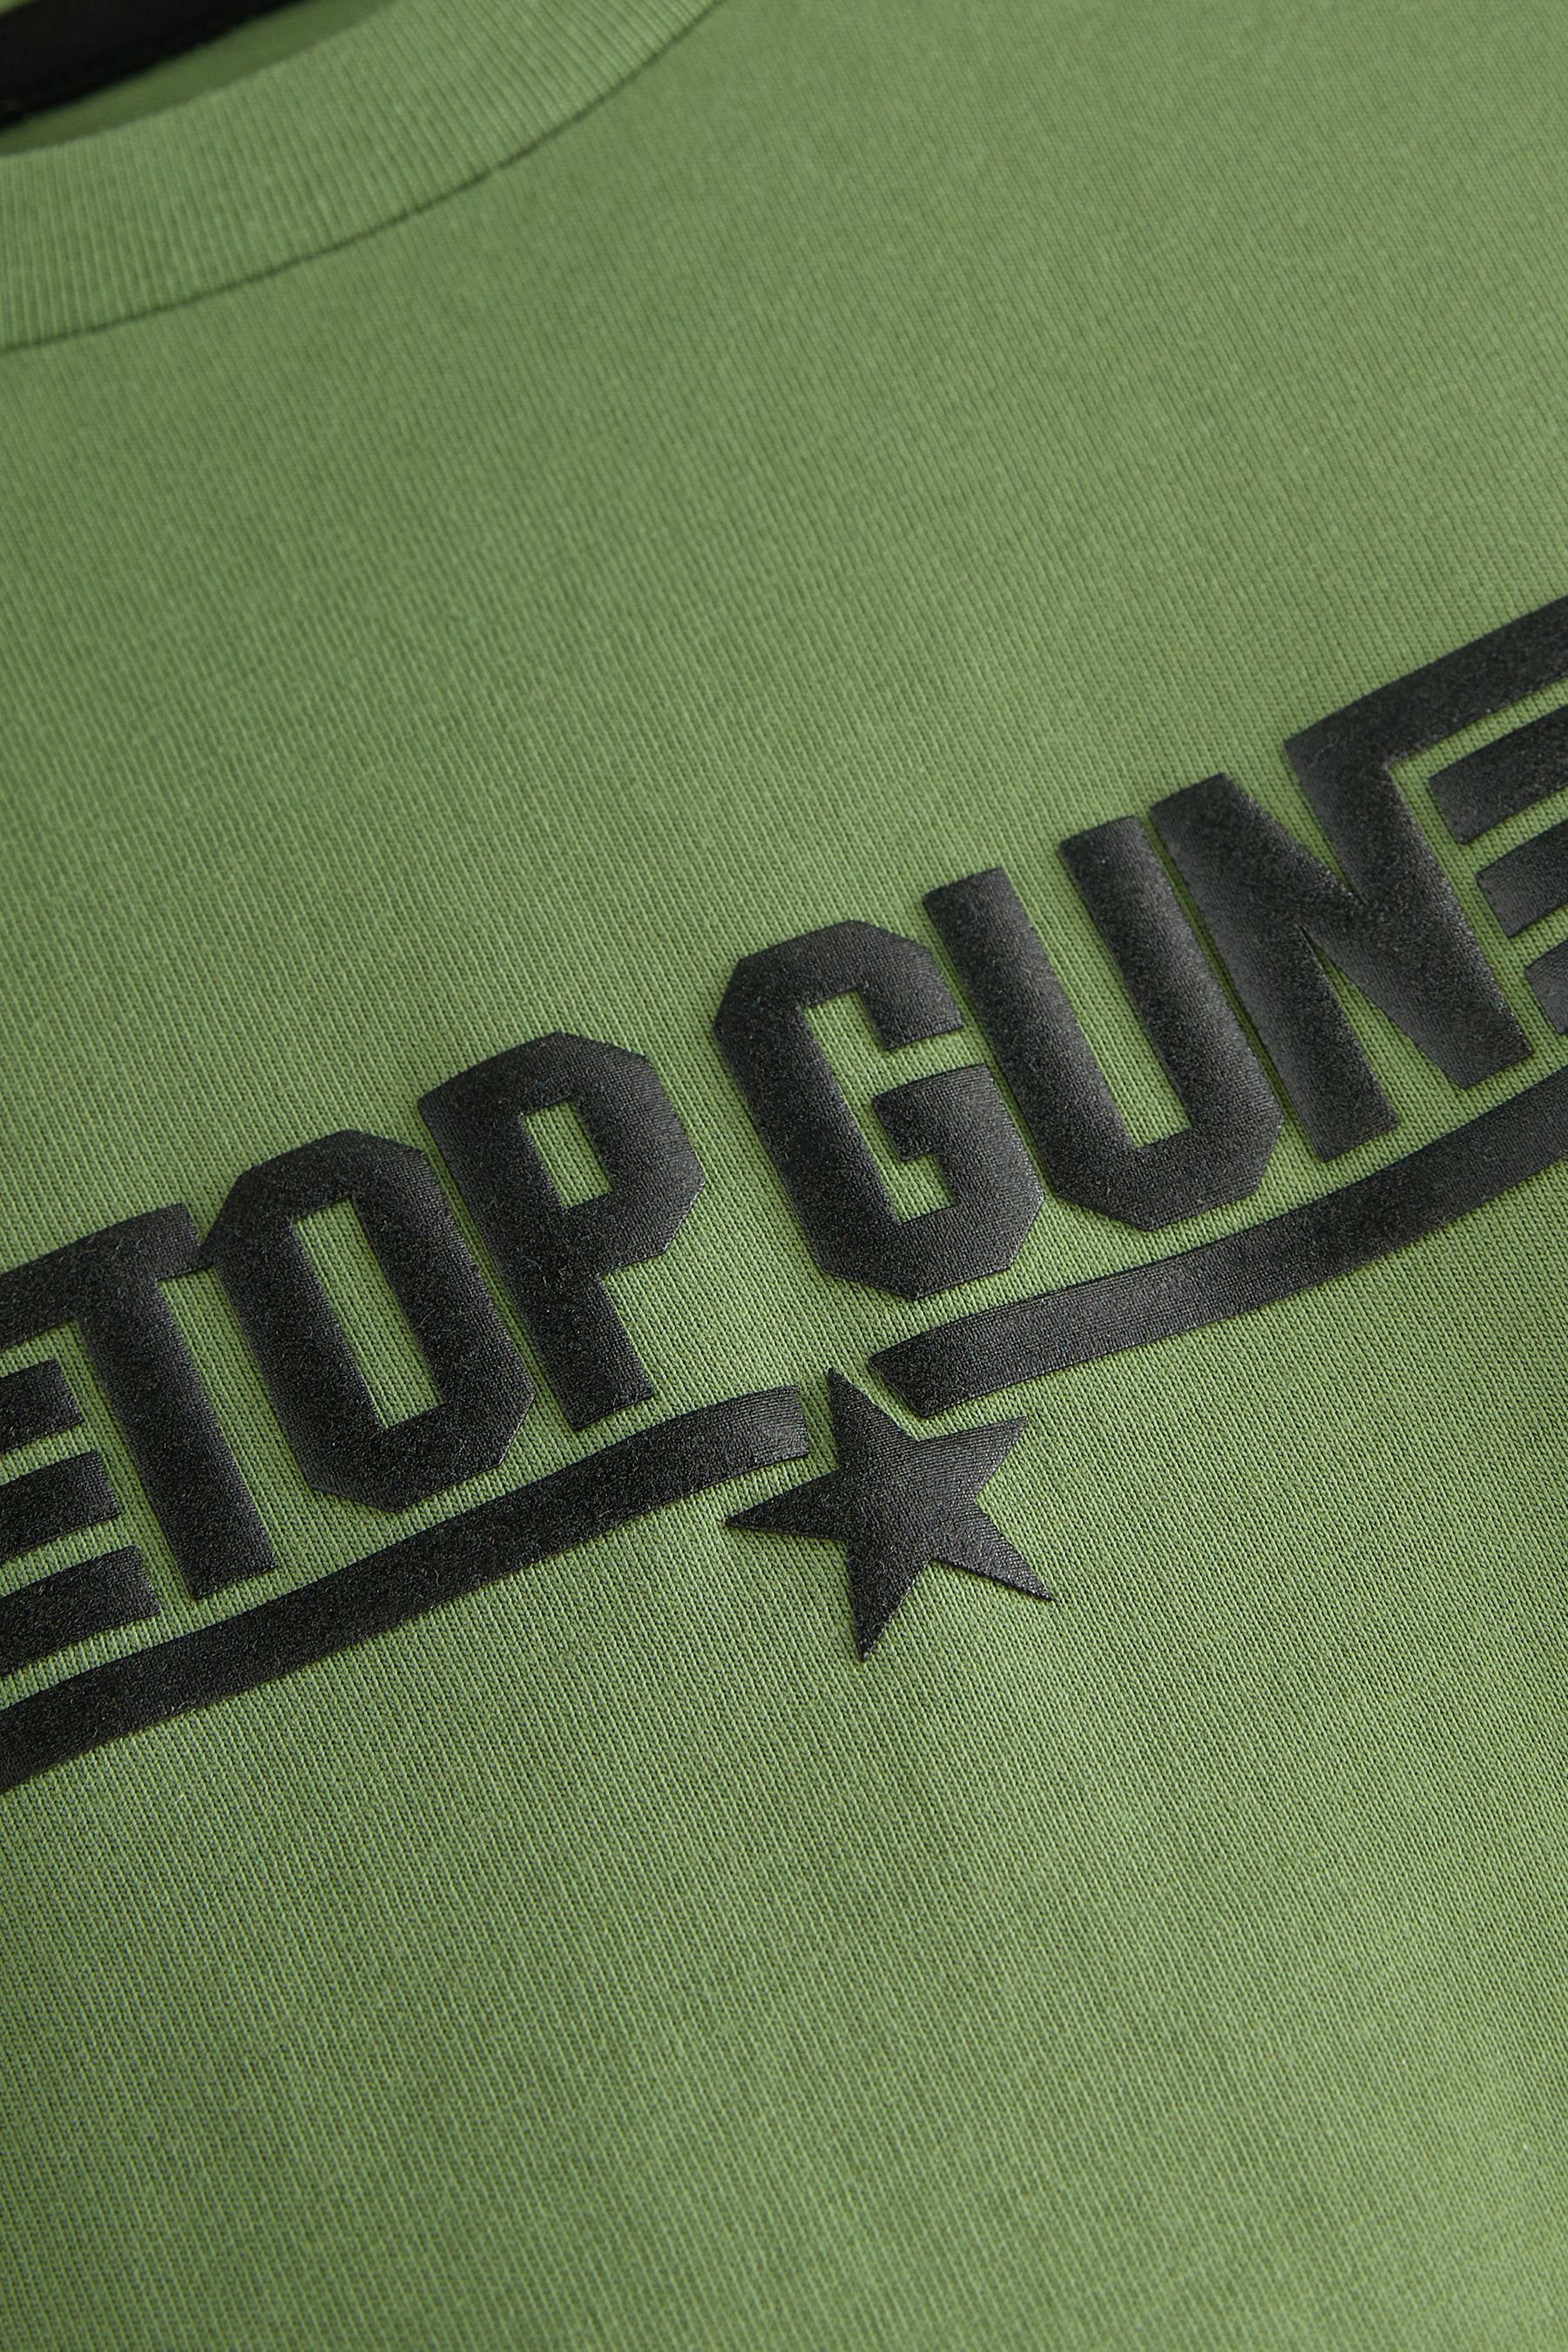 (1-tlg) T-Shirt Gun Next Top Maverick T-Shirt